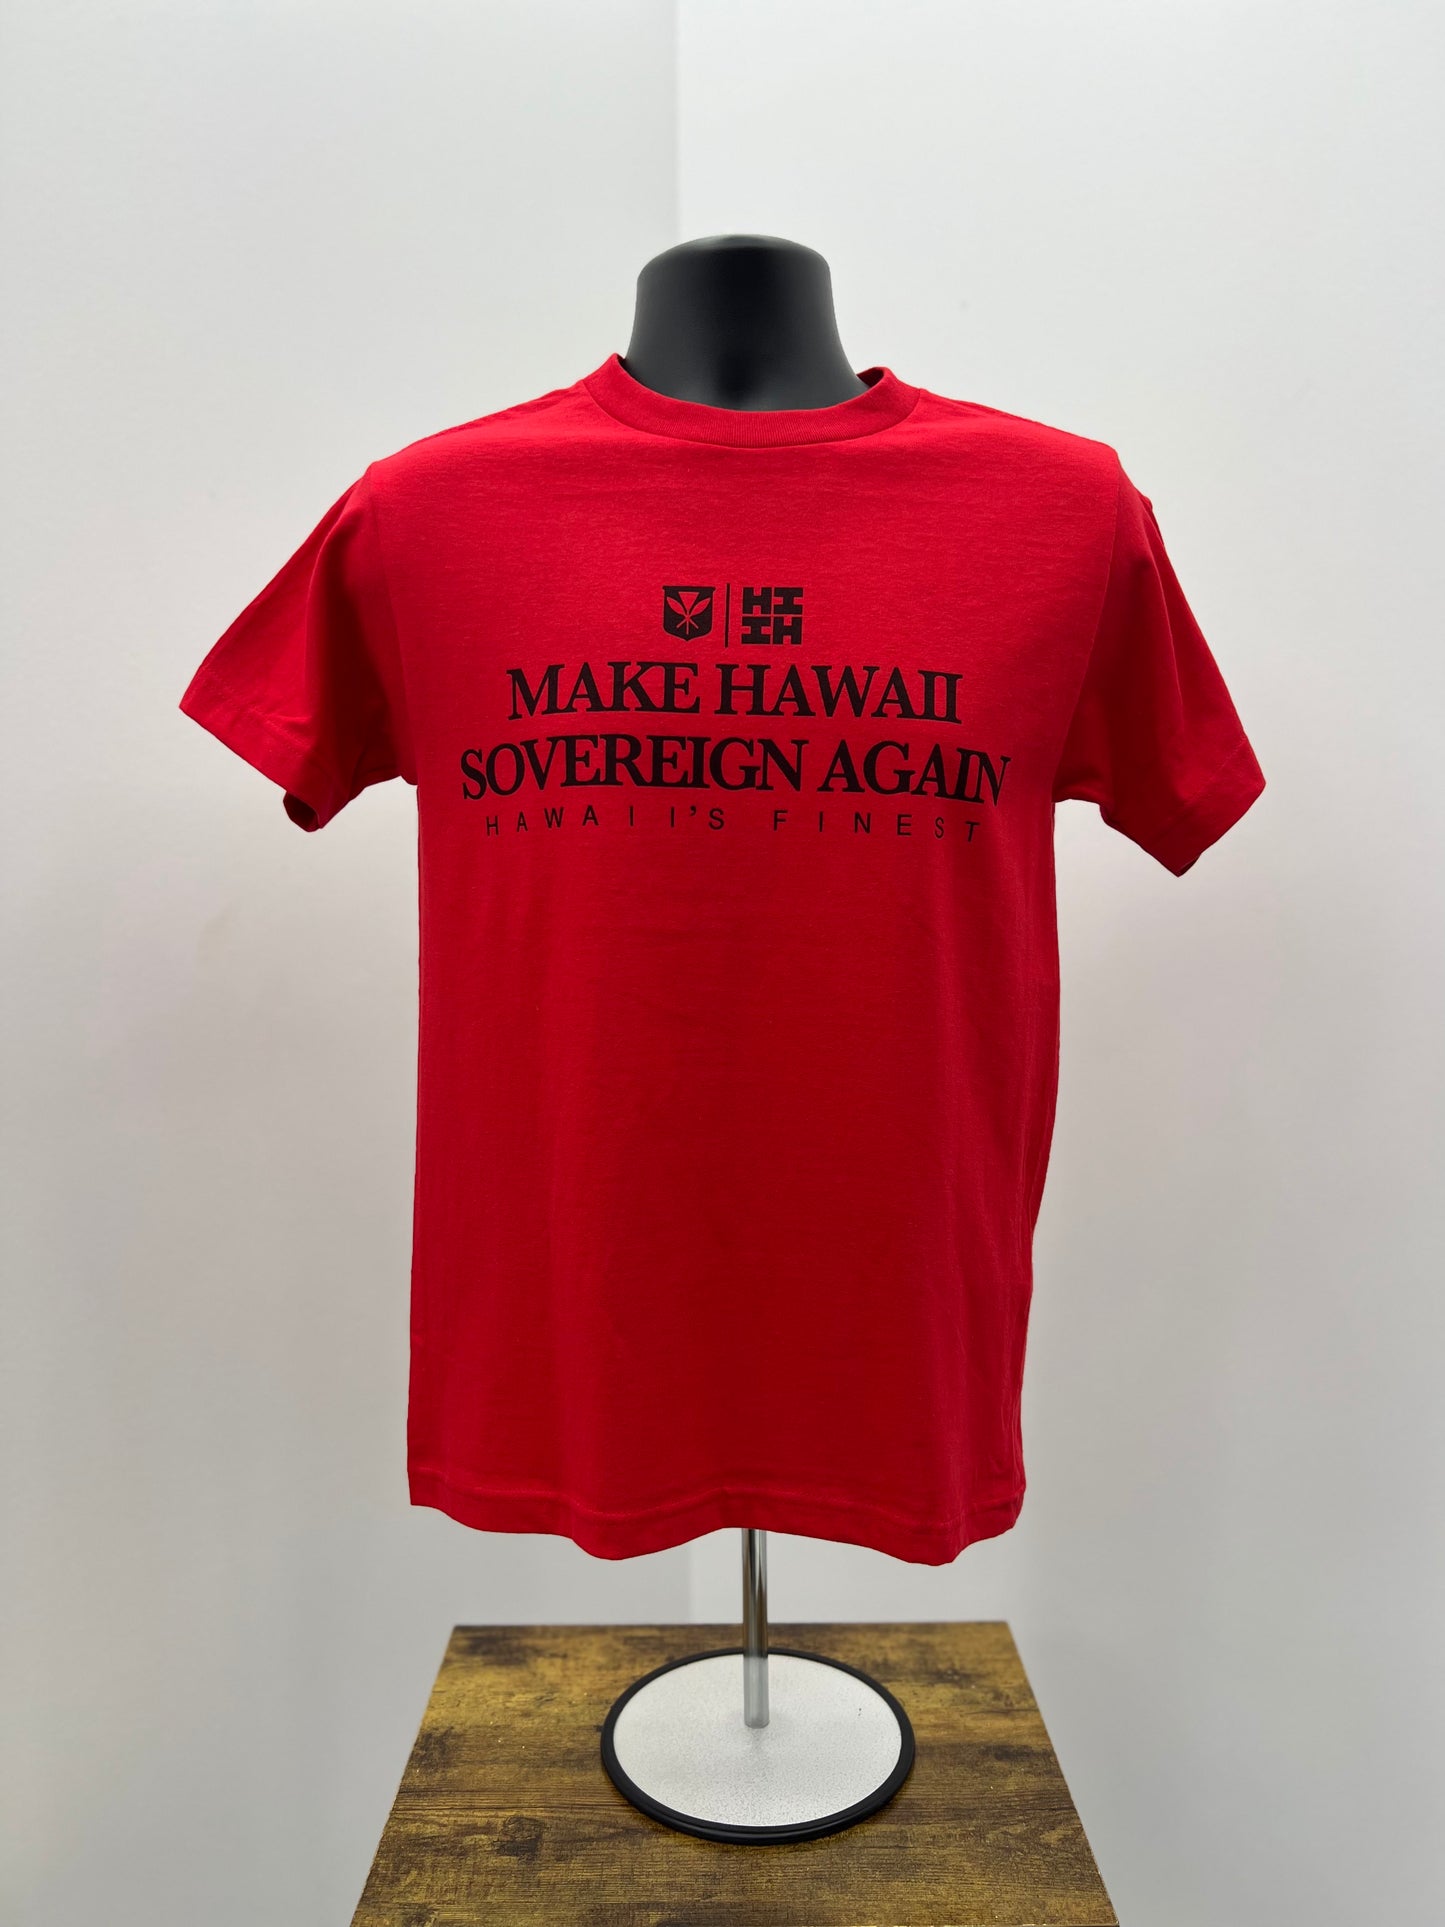 Make Hawaii Sovereign Again T-Shirt - Red/Black